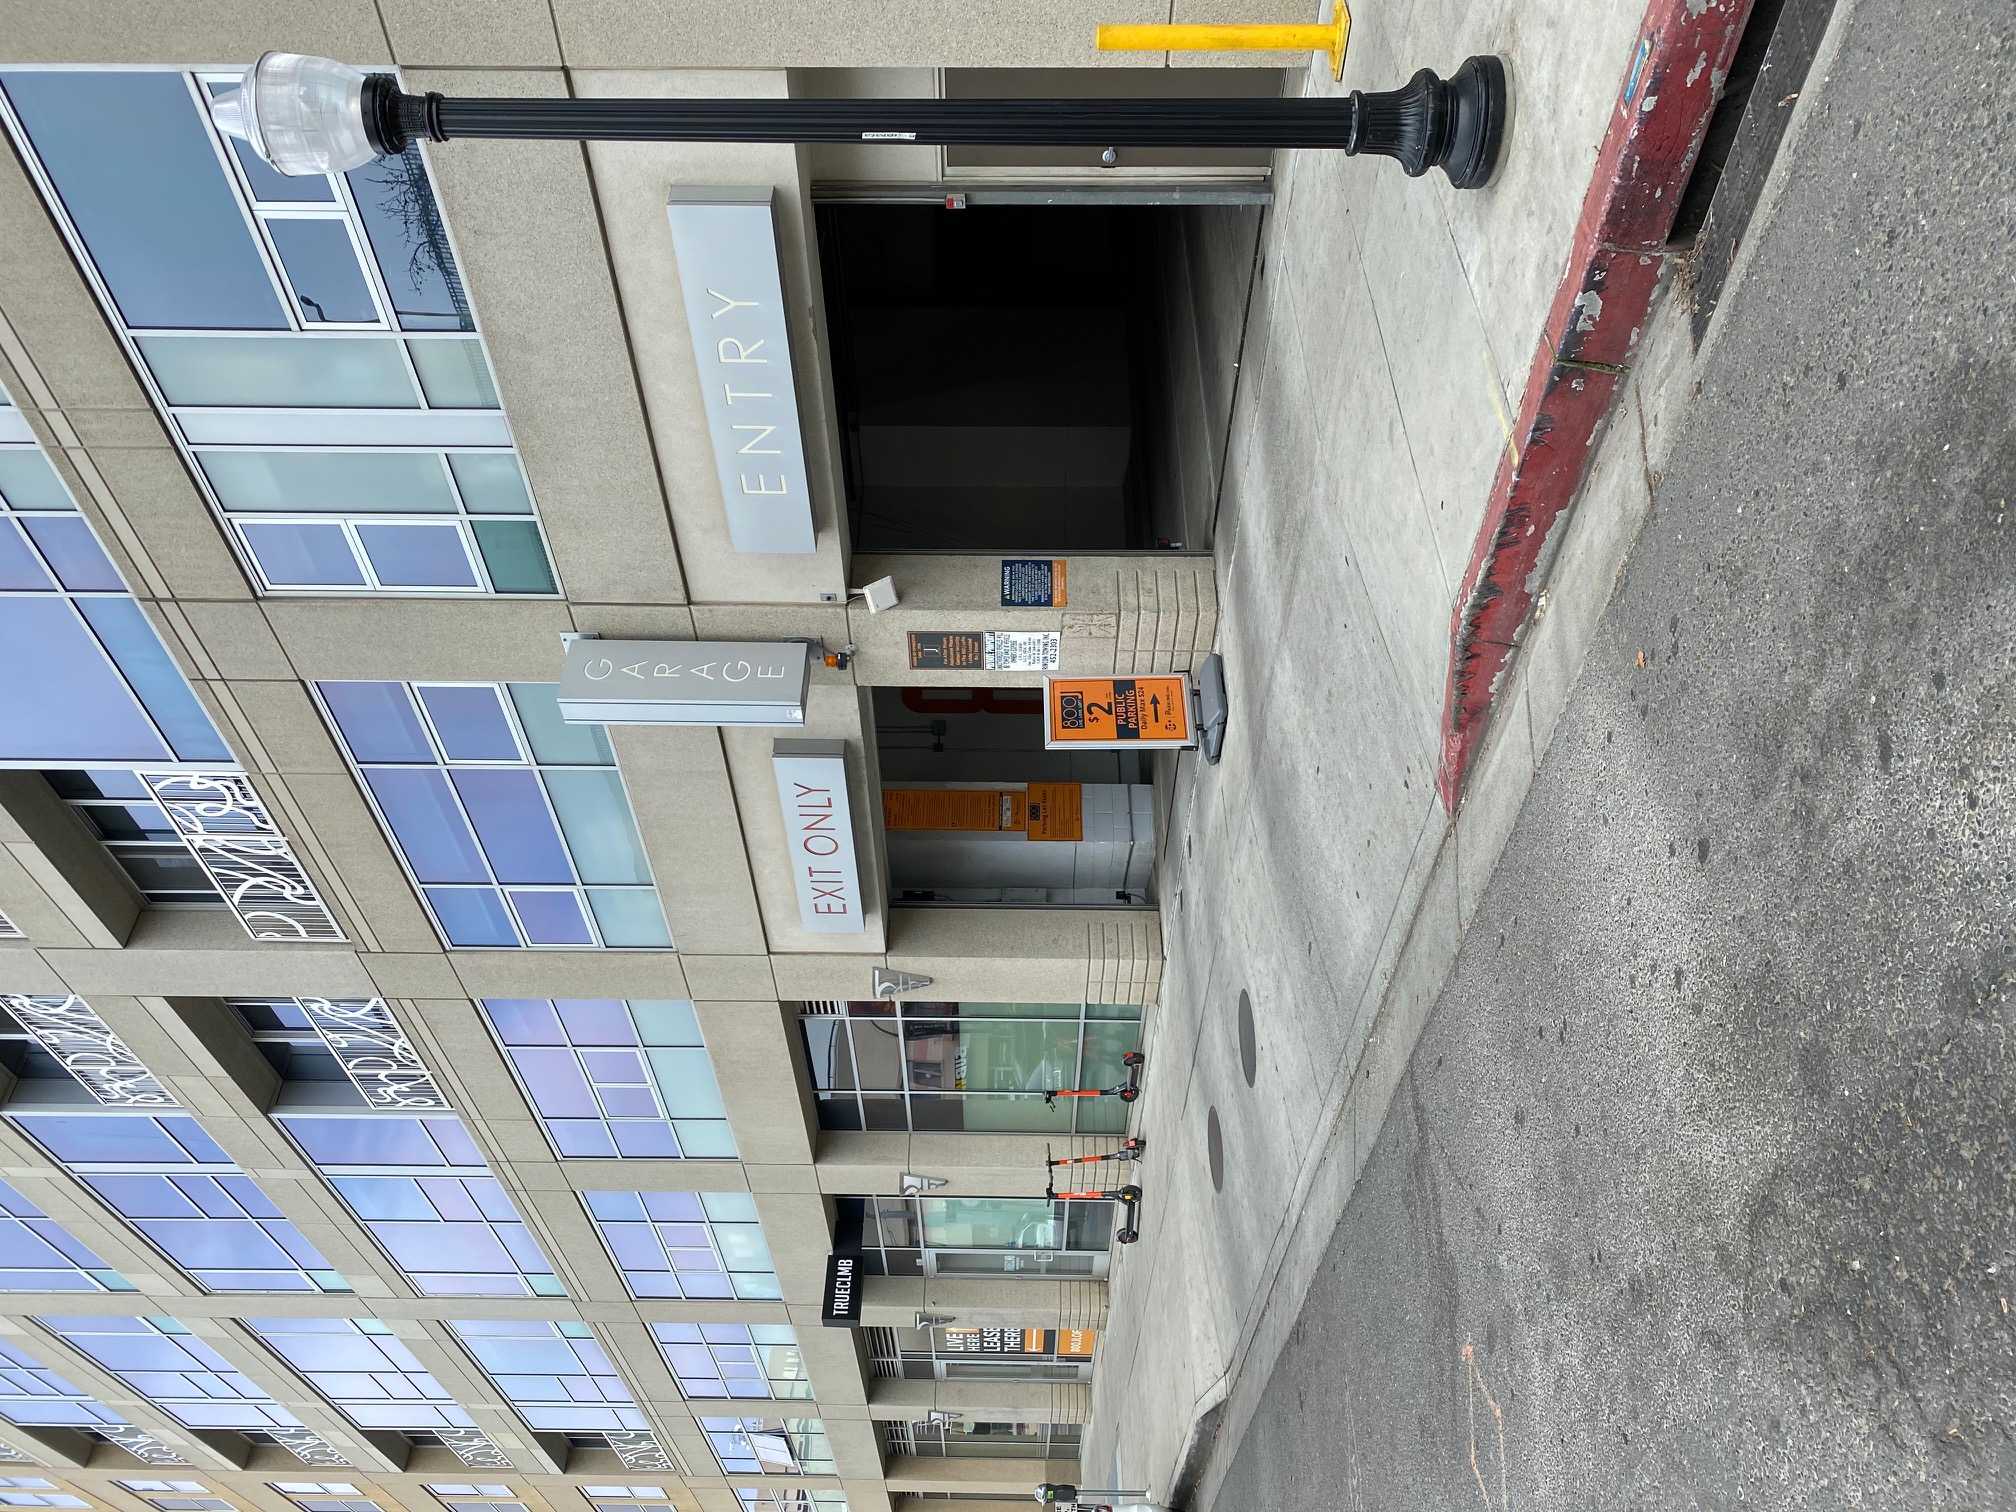 Parking Garage Entrance-8th Street